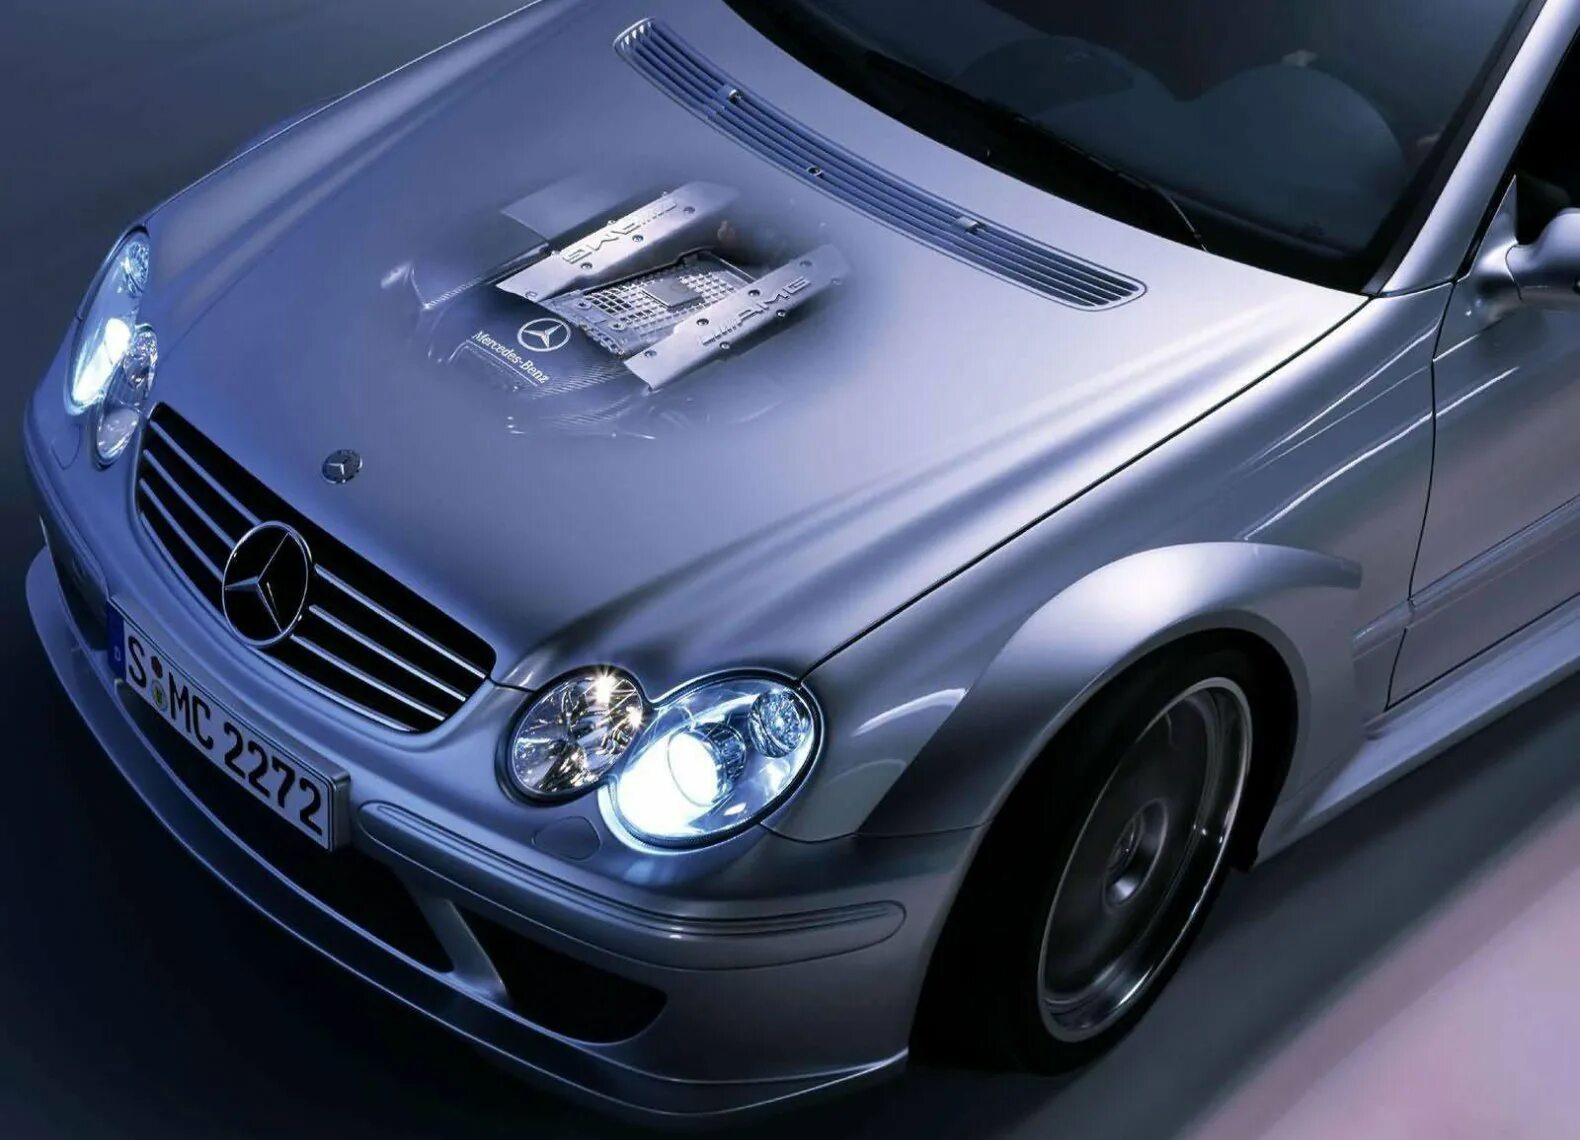 Mercedes-Benz w209. 2004 Mercedes-Benz CLK AMG. Mercedes-Benz CLK DTM AMG. Мерседес ЦЛК. Капот мерседес бенц